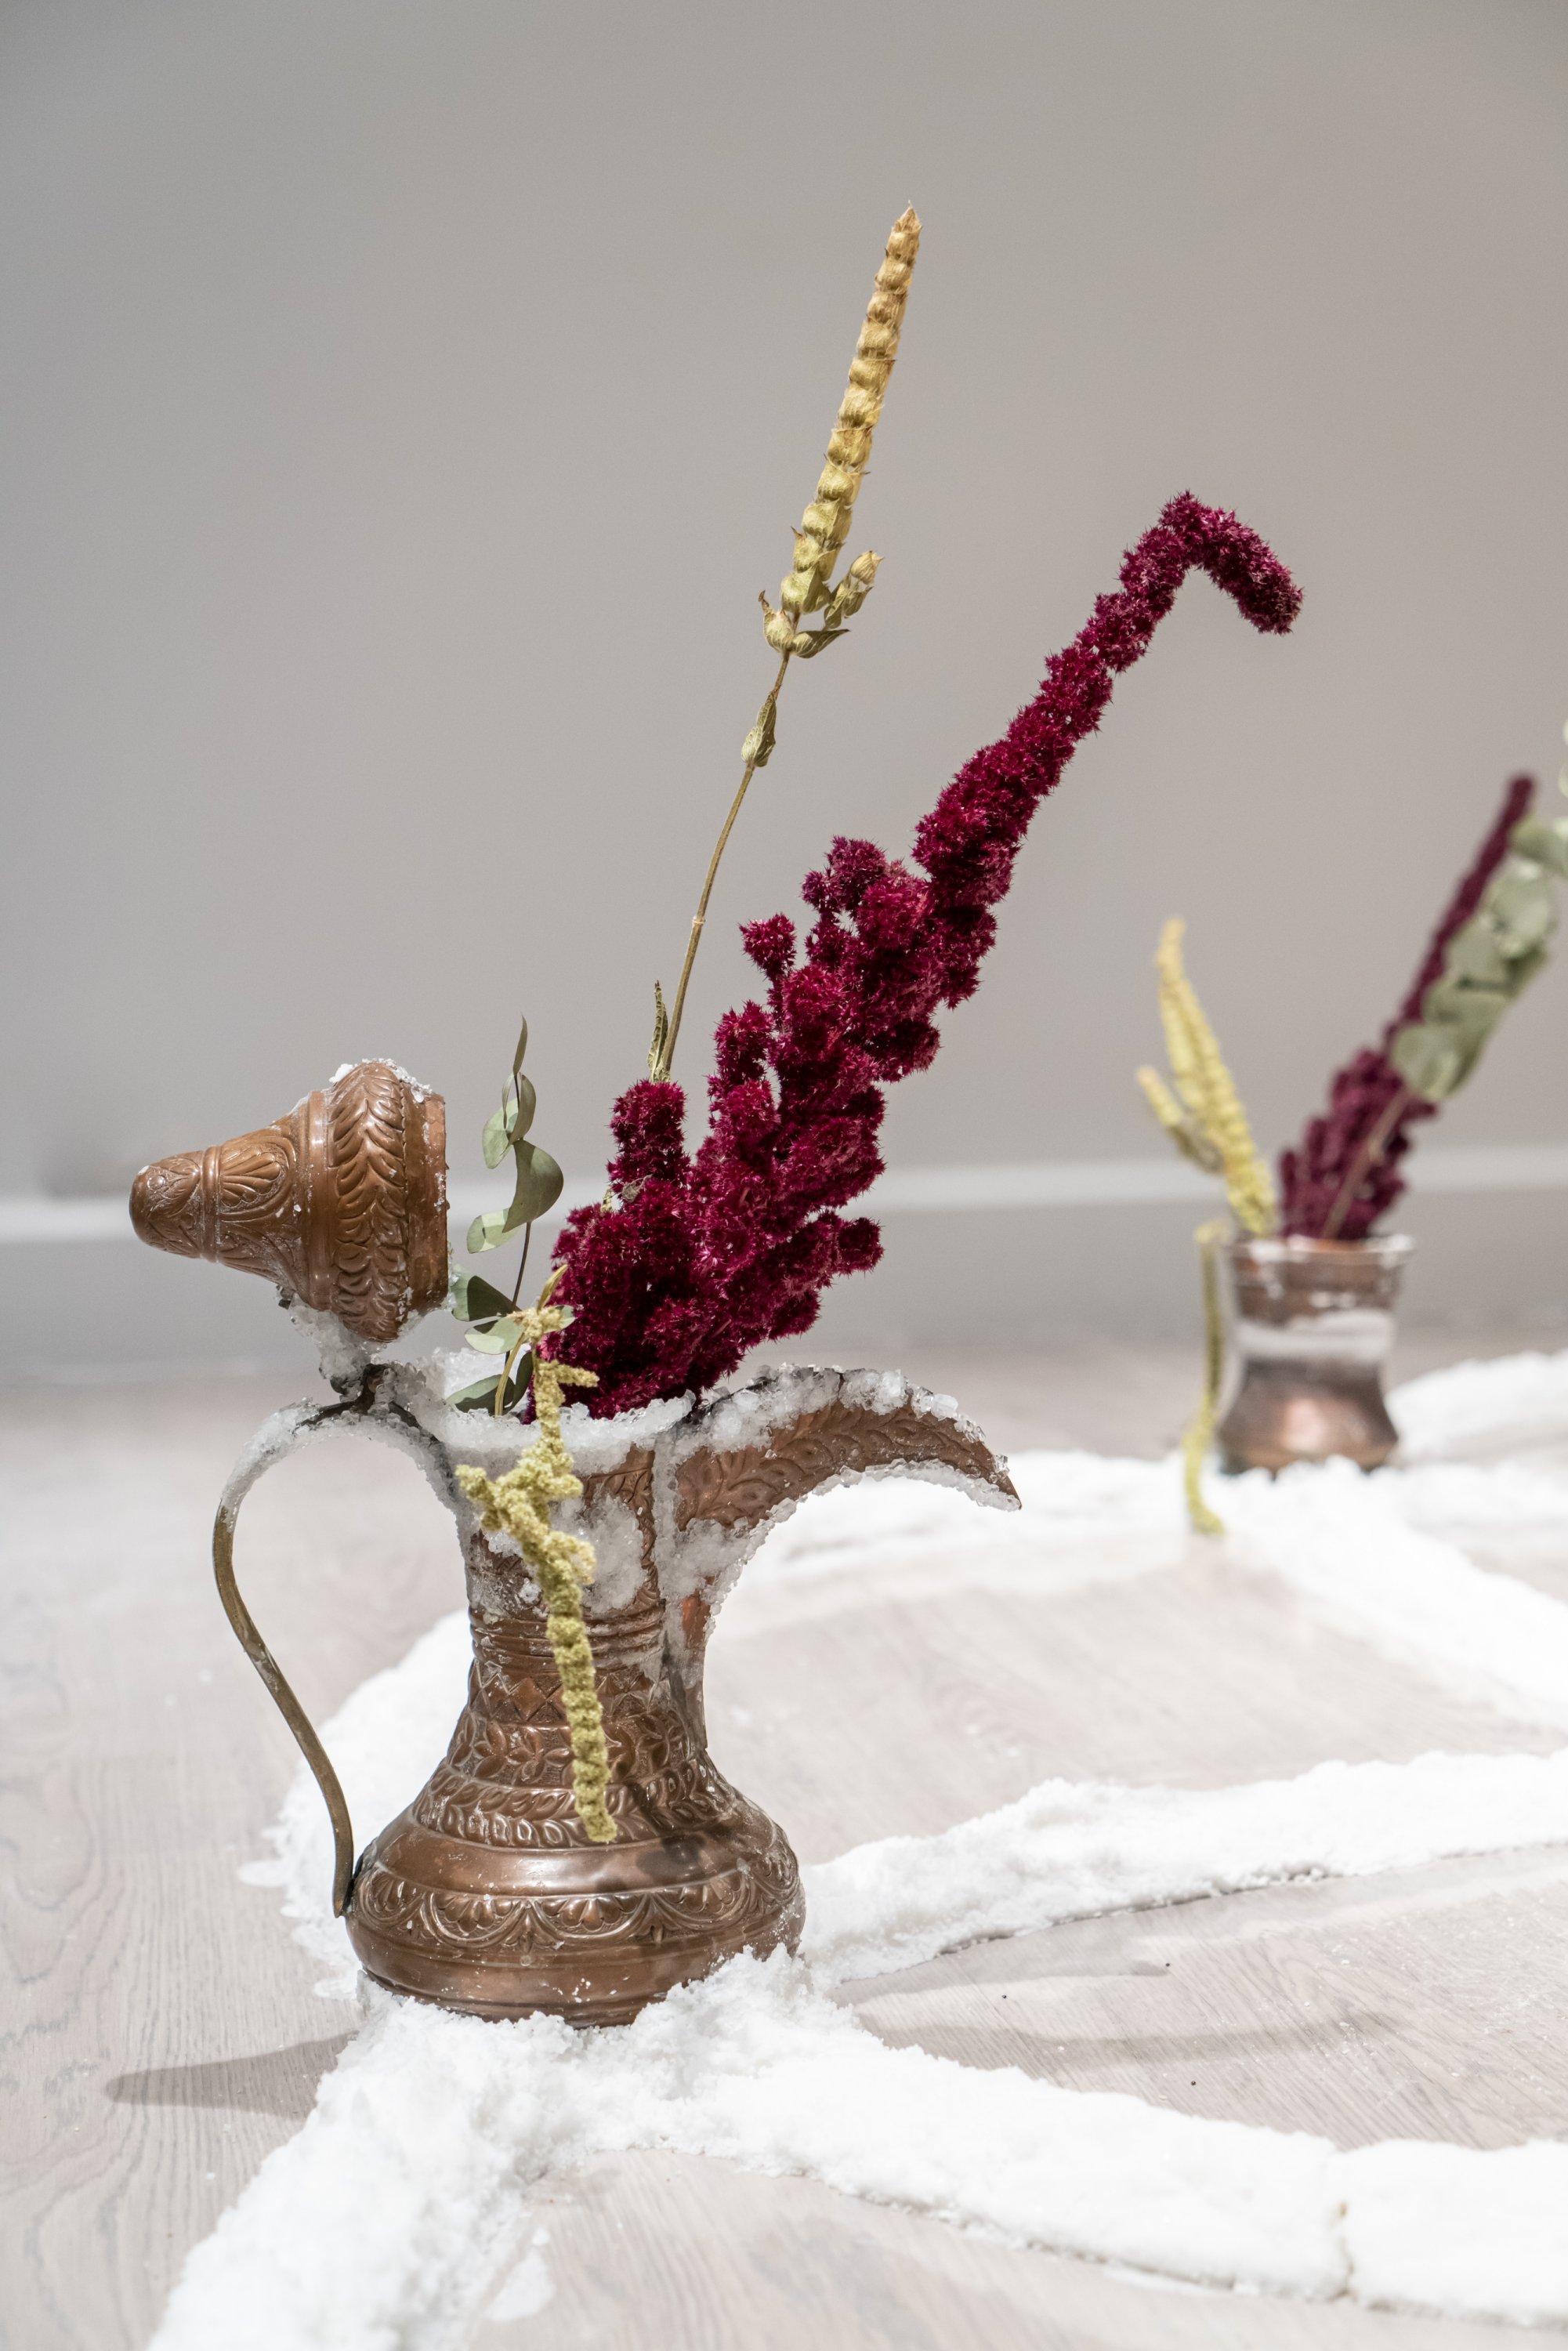 Bianca Bondi, untitled, 2020, salt crystals, plants and copper vases. (Courtesy of Pera Museum)